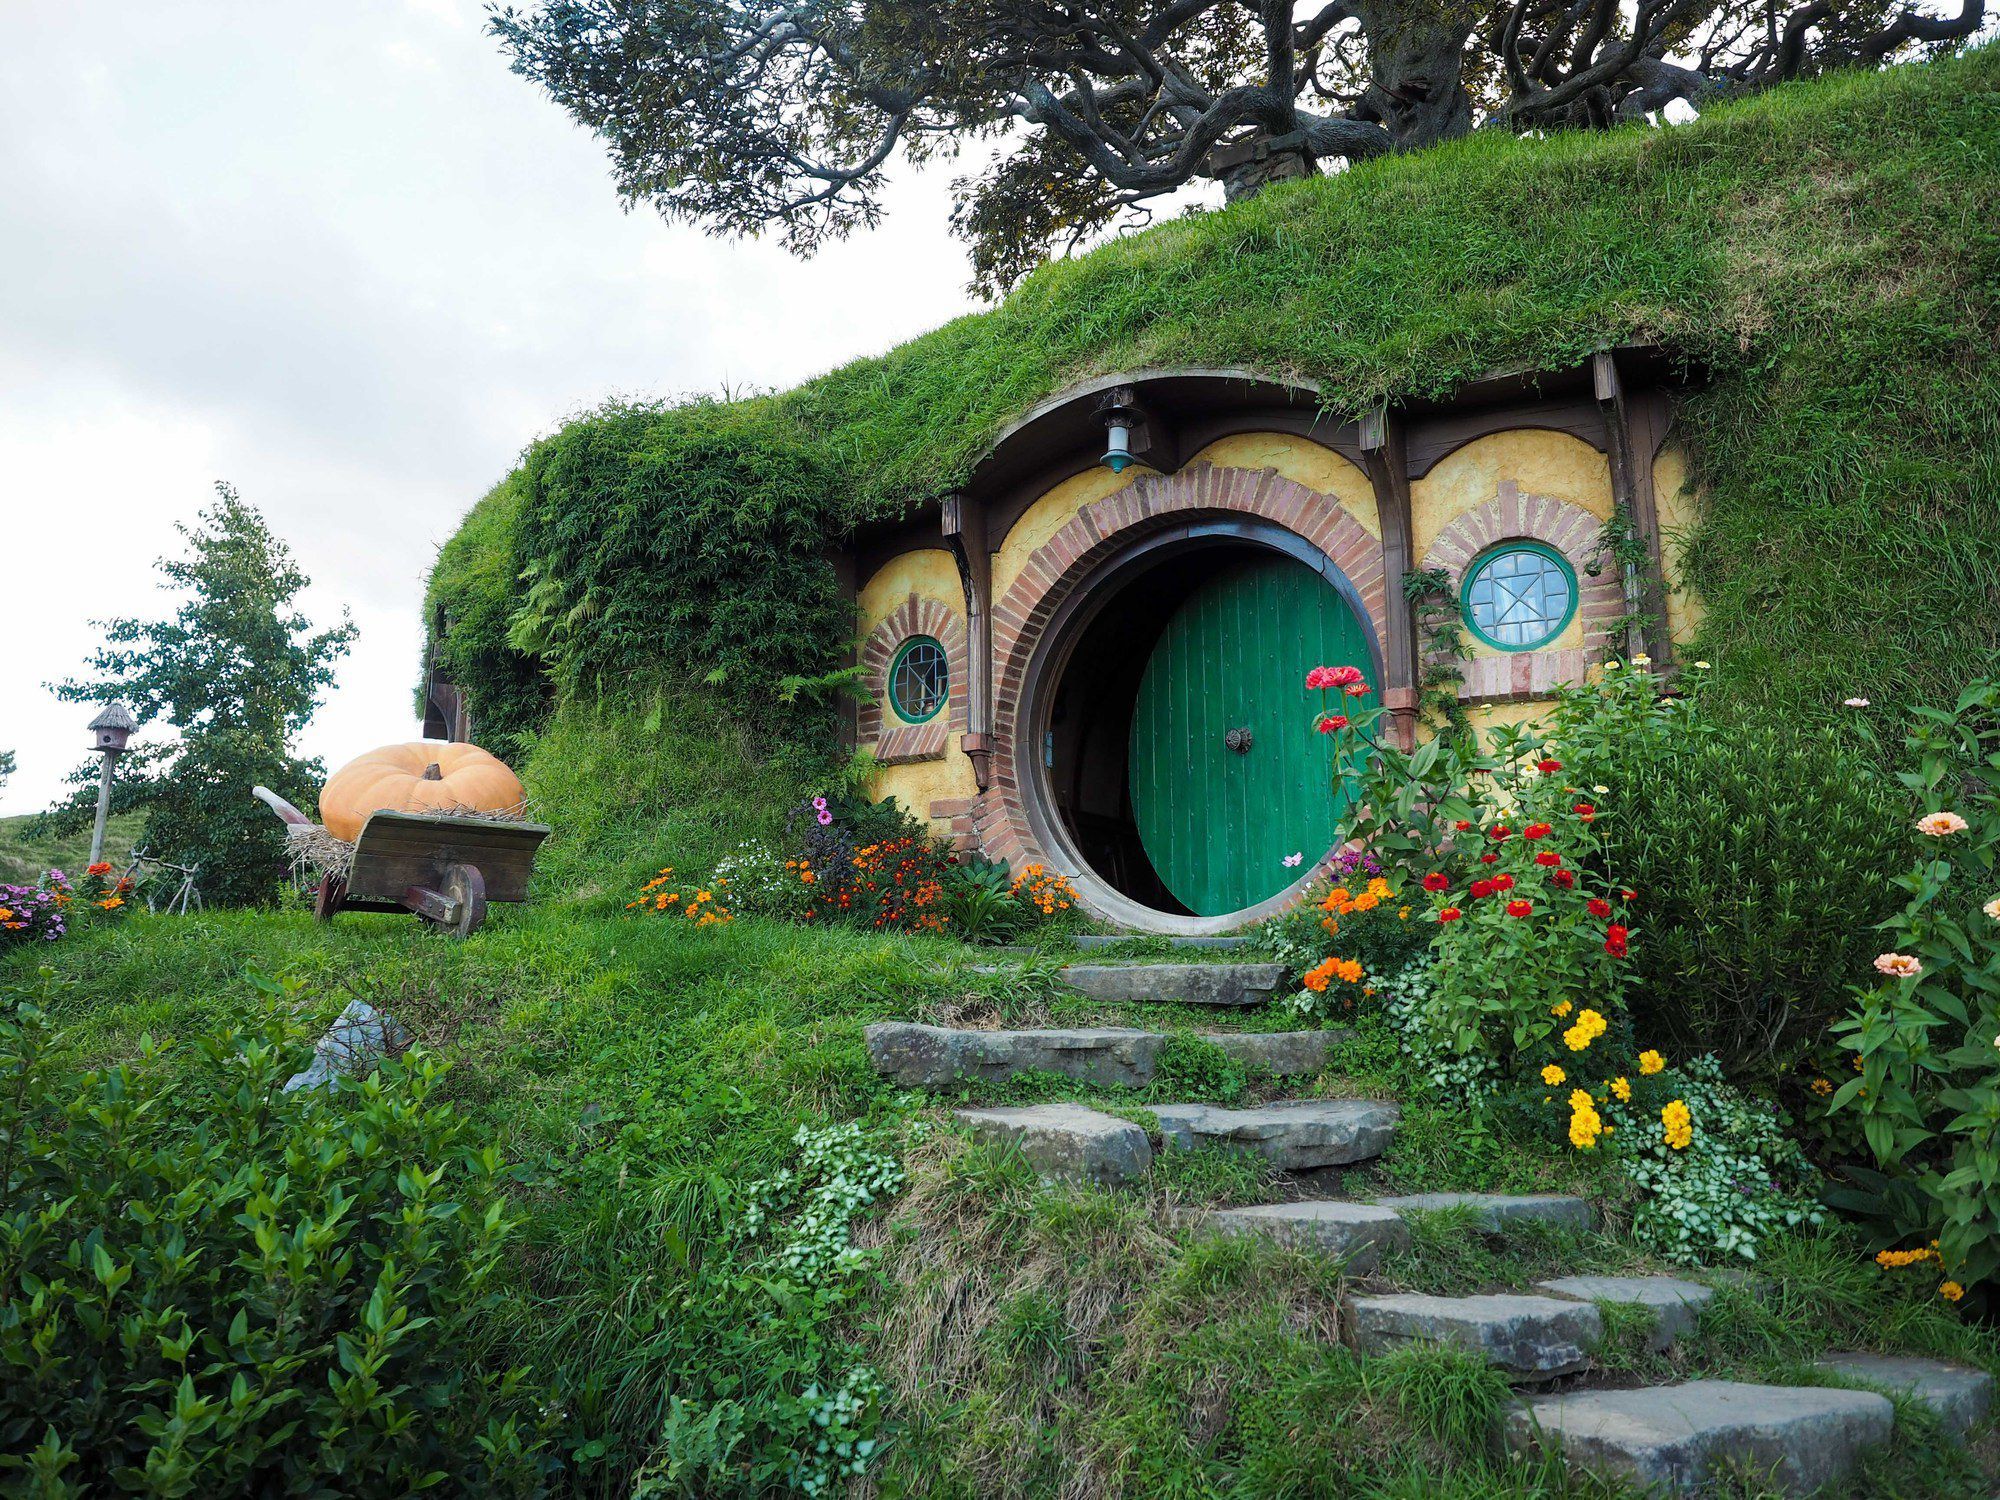 Exterior of Bilbo and Frodo's home